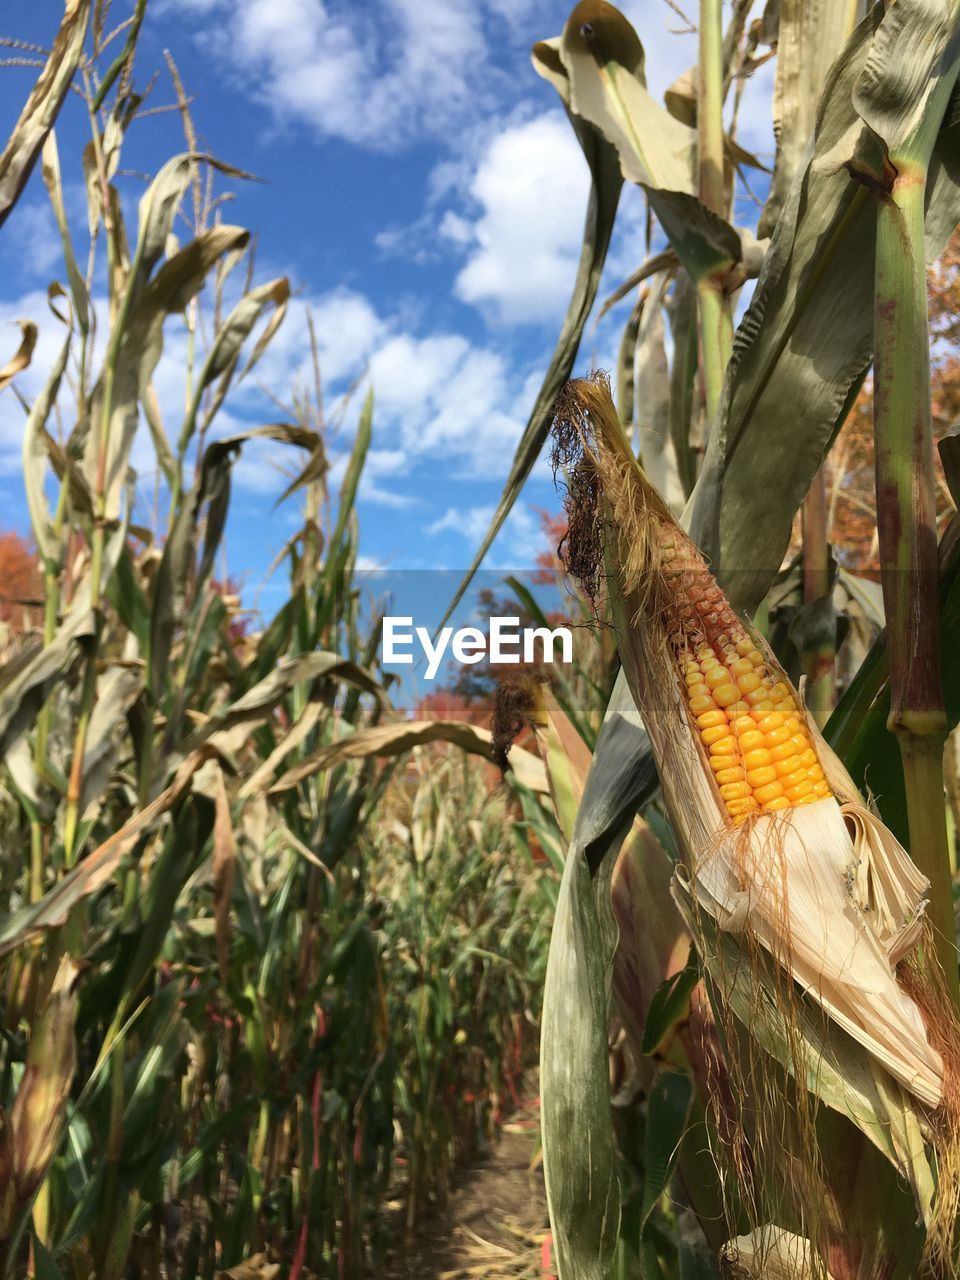 Corn growing on field against sky